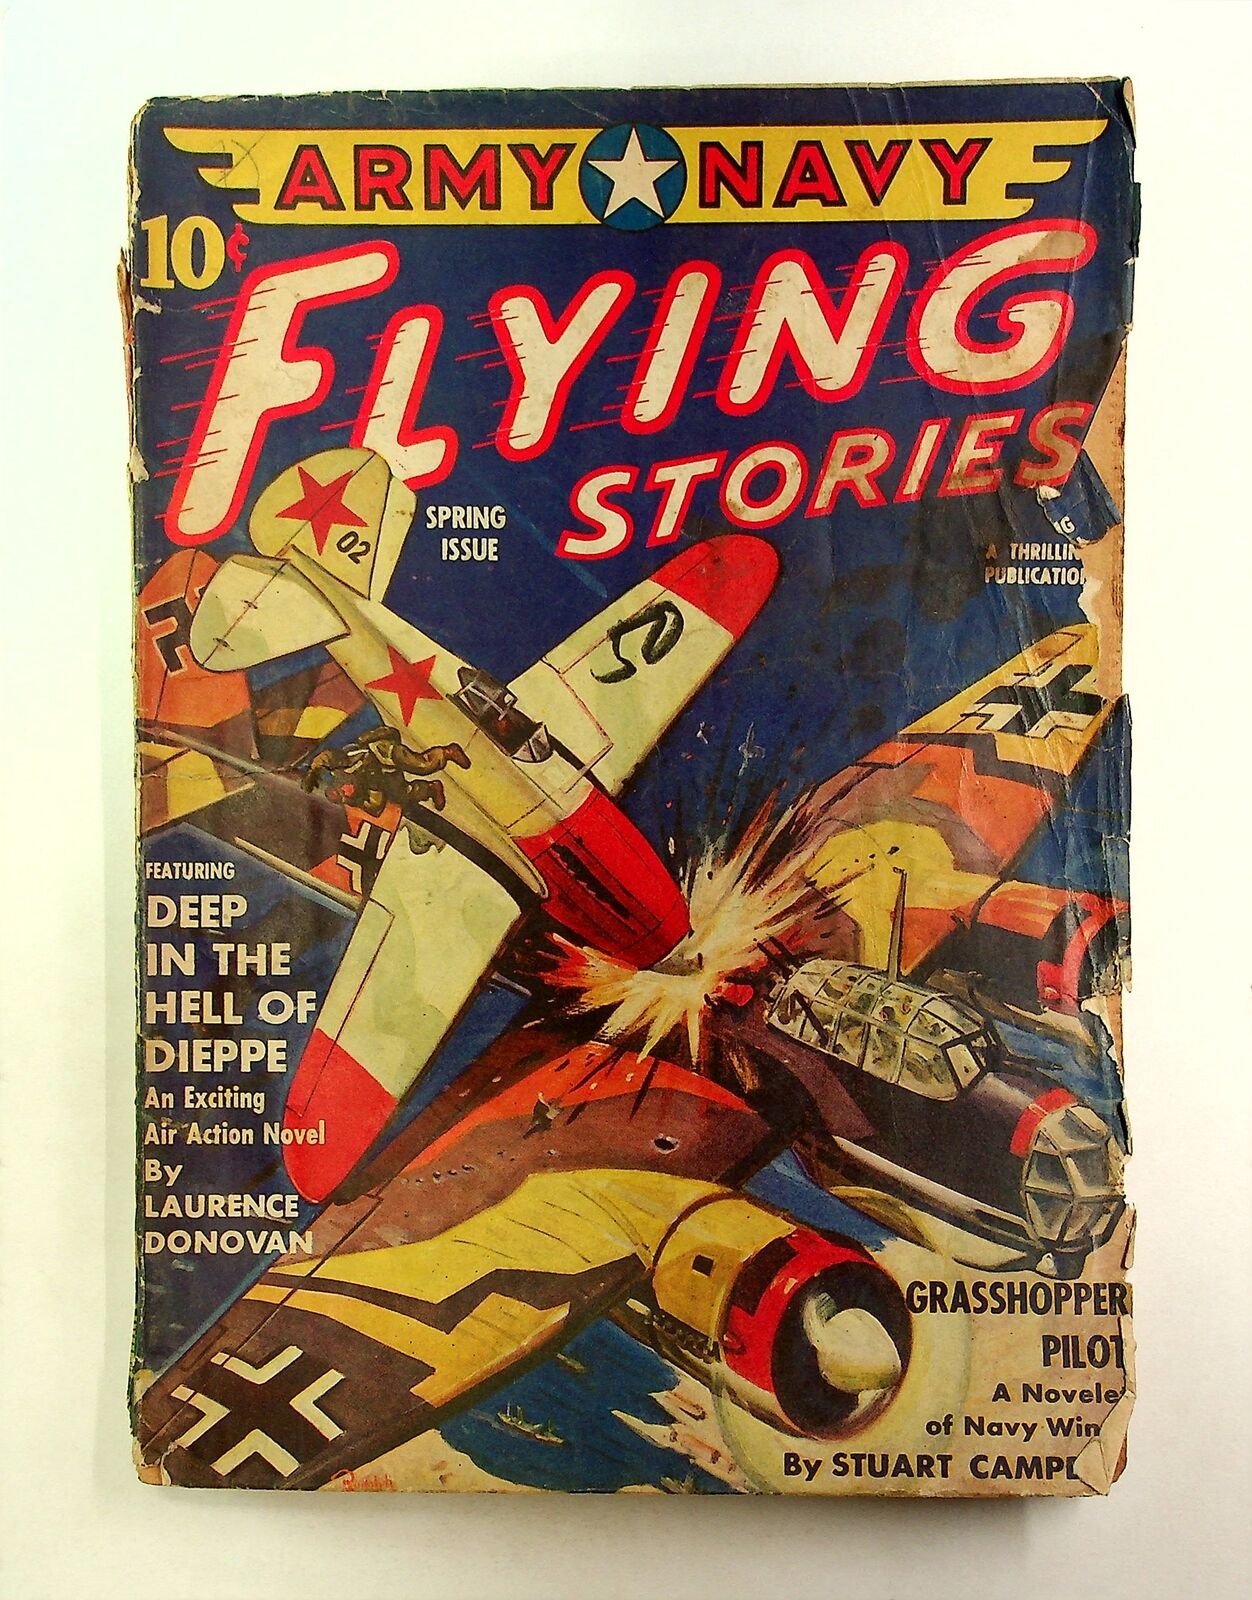 Army-Navy Flying Stories Pulp Mar 1943 Vol. 2 #1 FR/GD 1.5